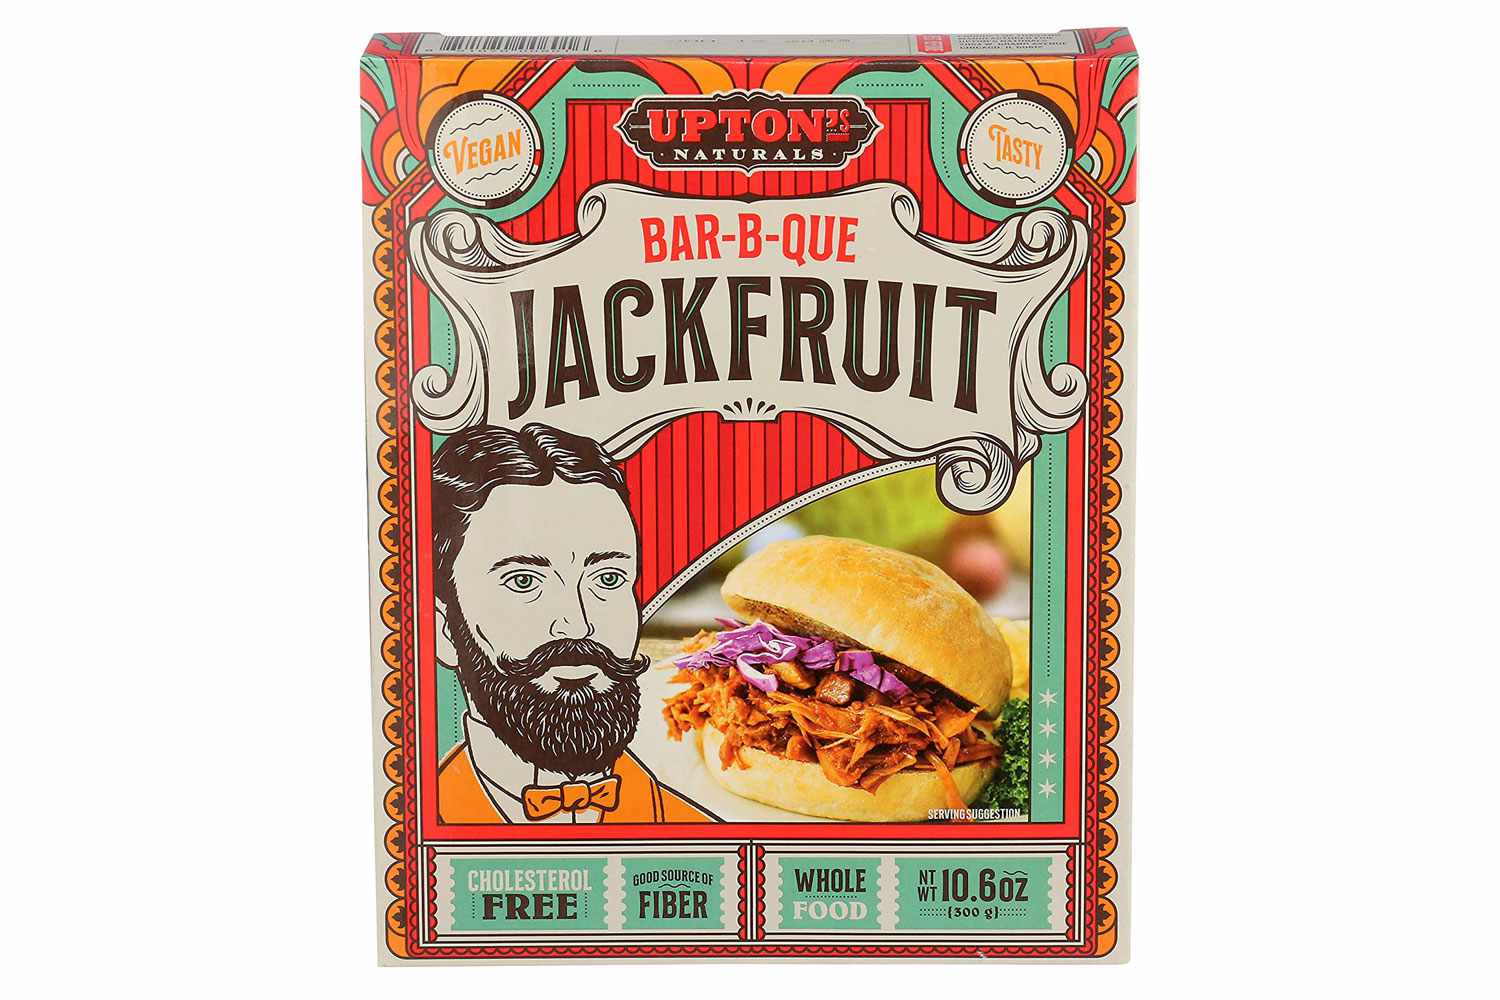 Uptonâs Naturals Jackfruit Bar-B-Que